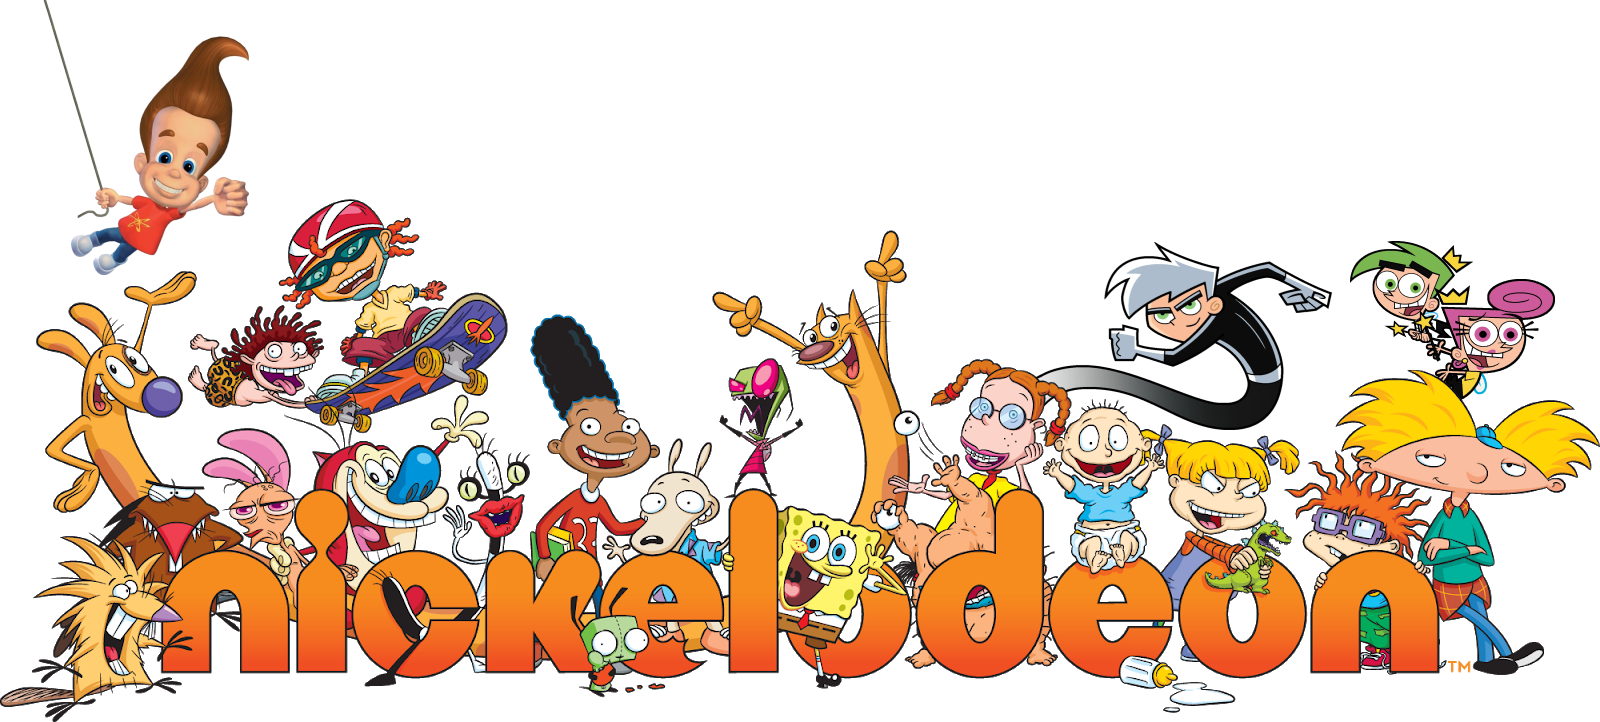 Nickelodeon Logo With 90's - 2000's - NickSplat by Tagirovo on DeviantArt